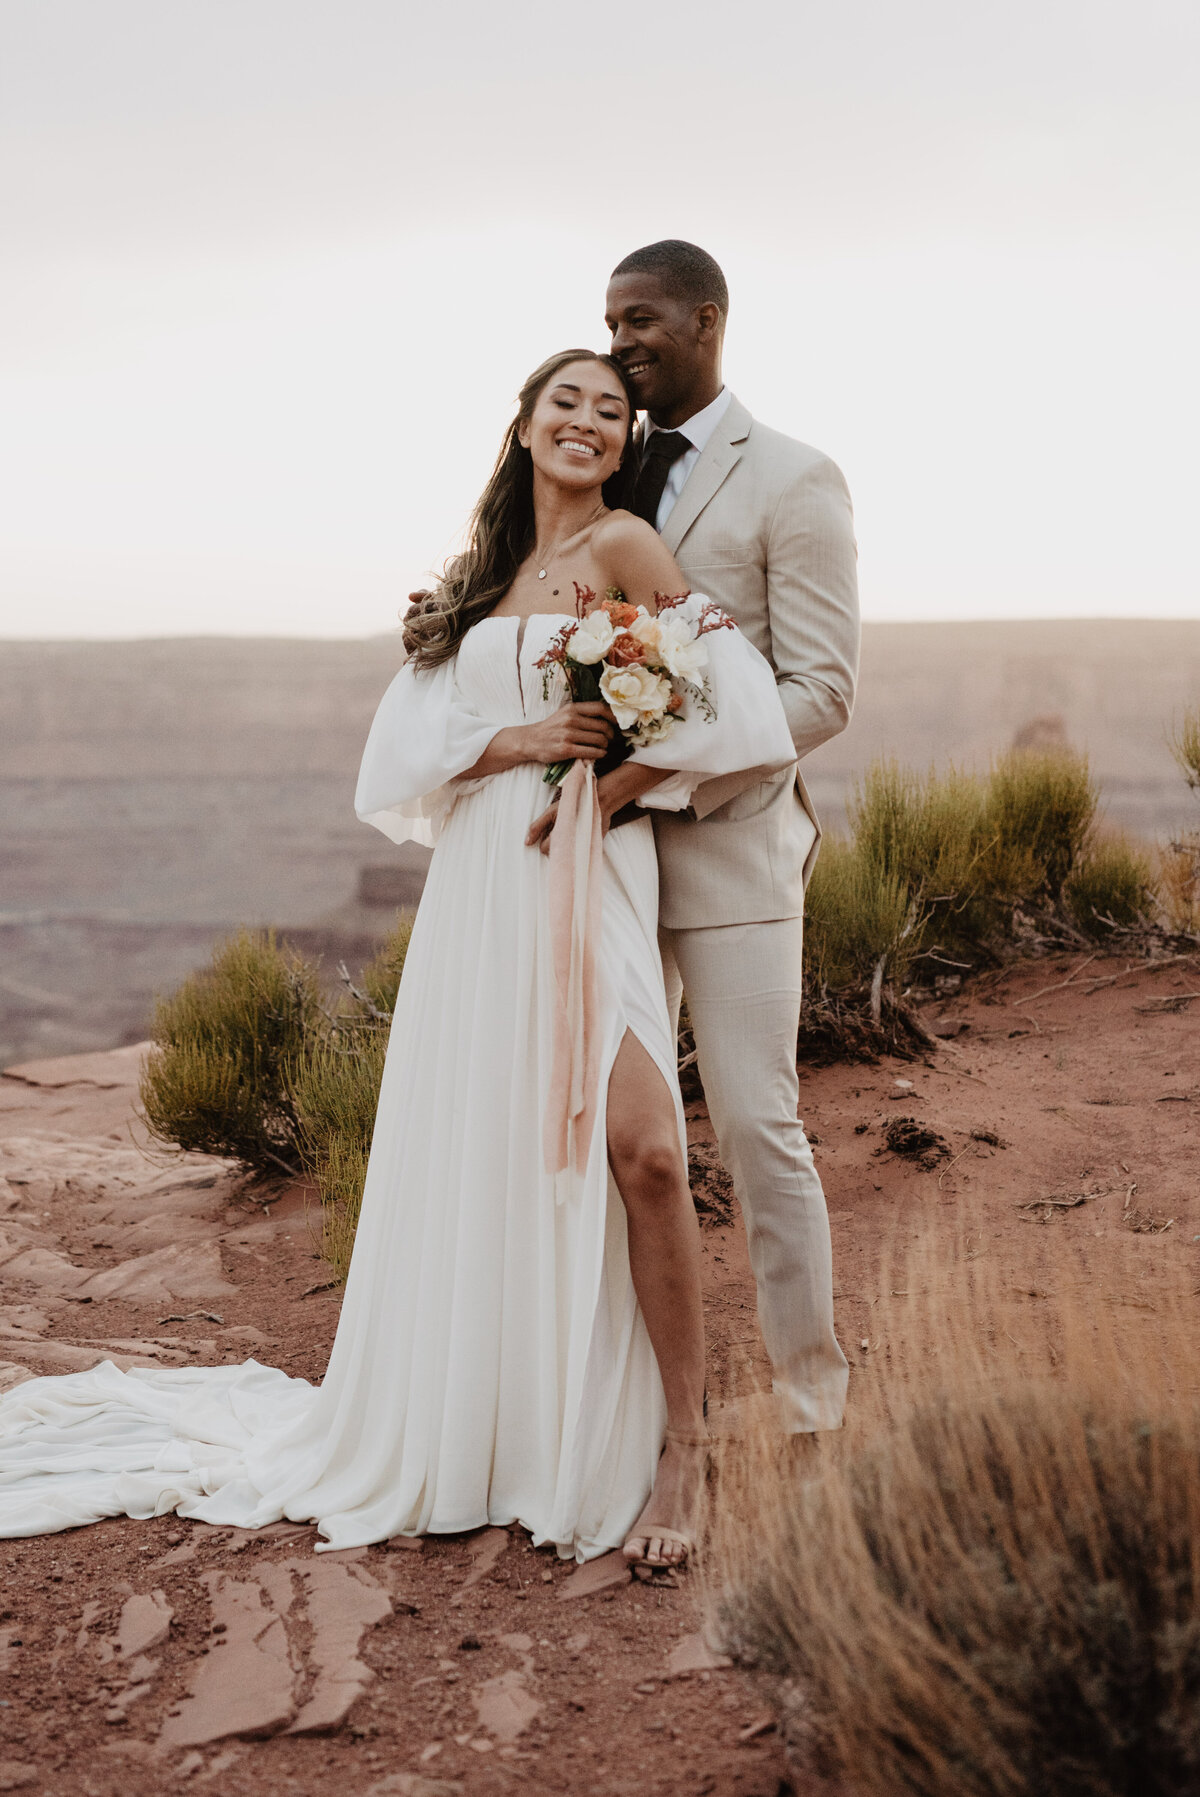 Utah Elopement Photographer captures couple embracing during bridal portraits